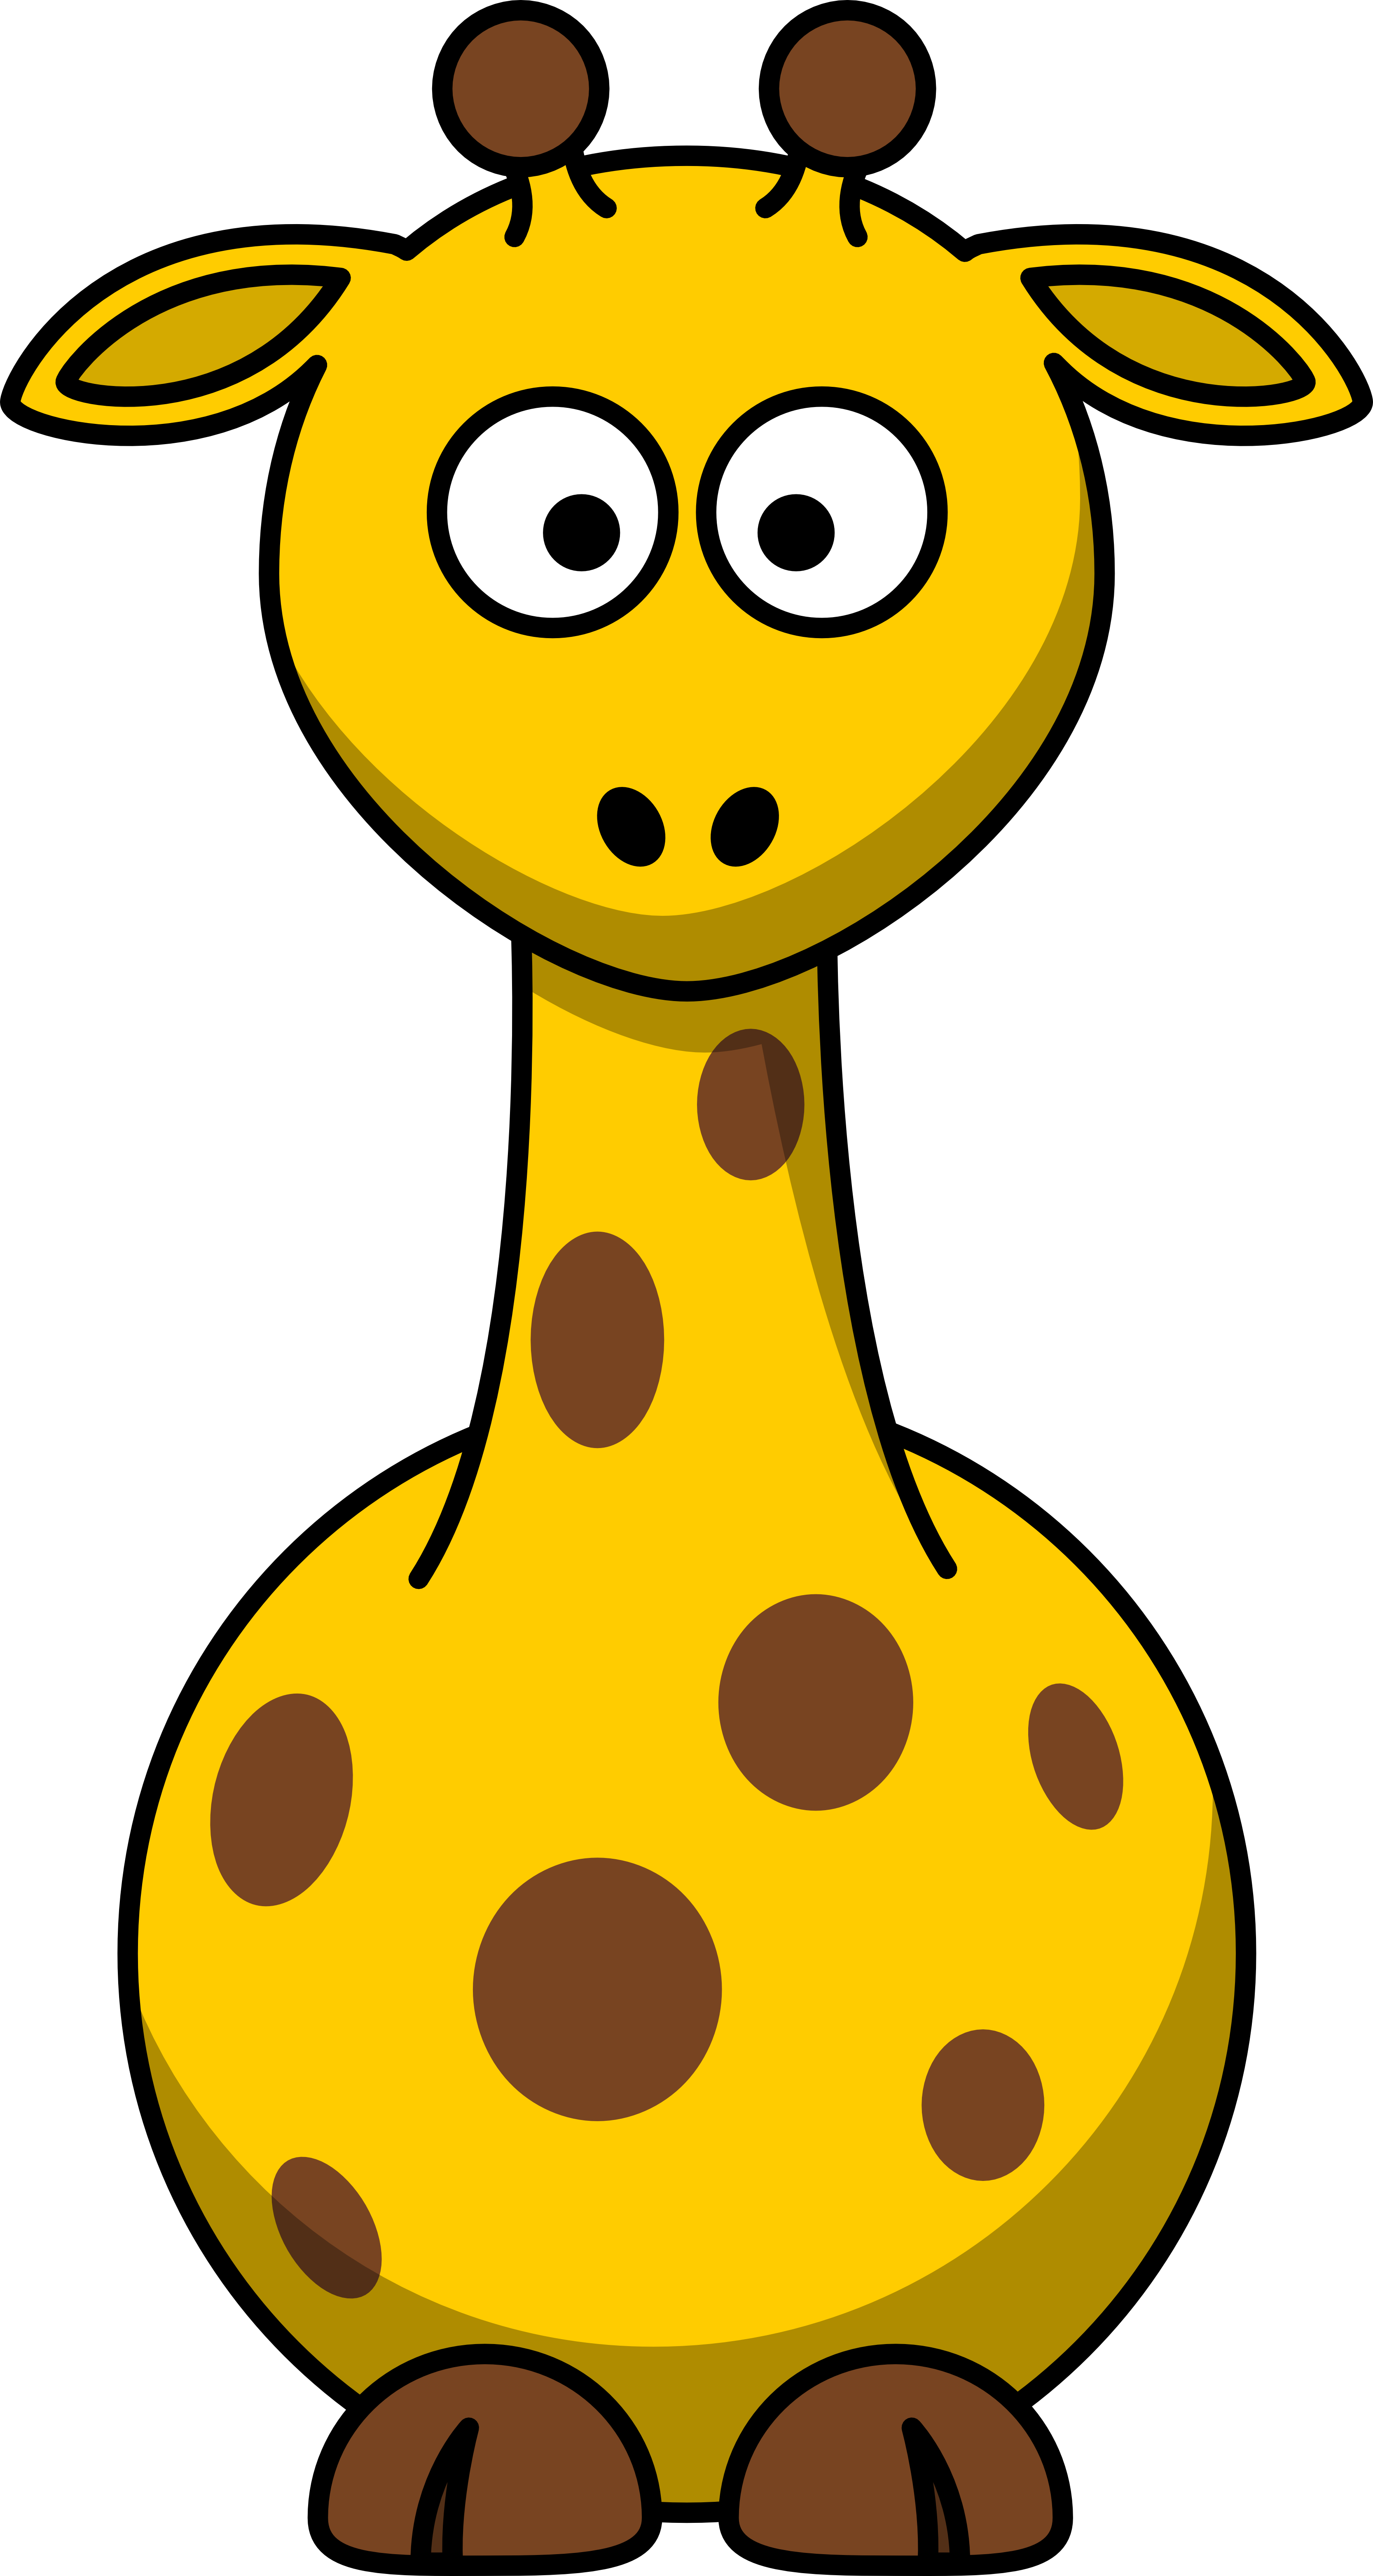 Giraffe bird